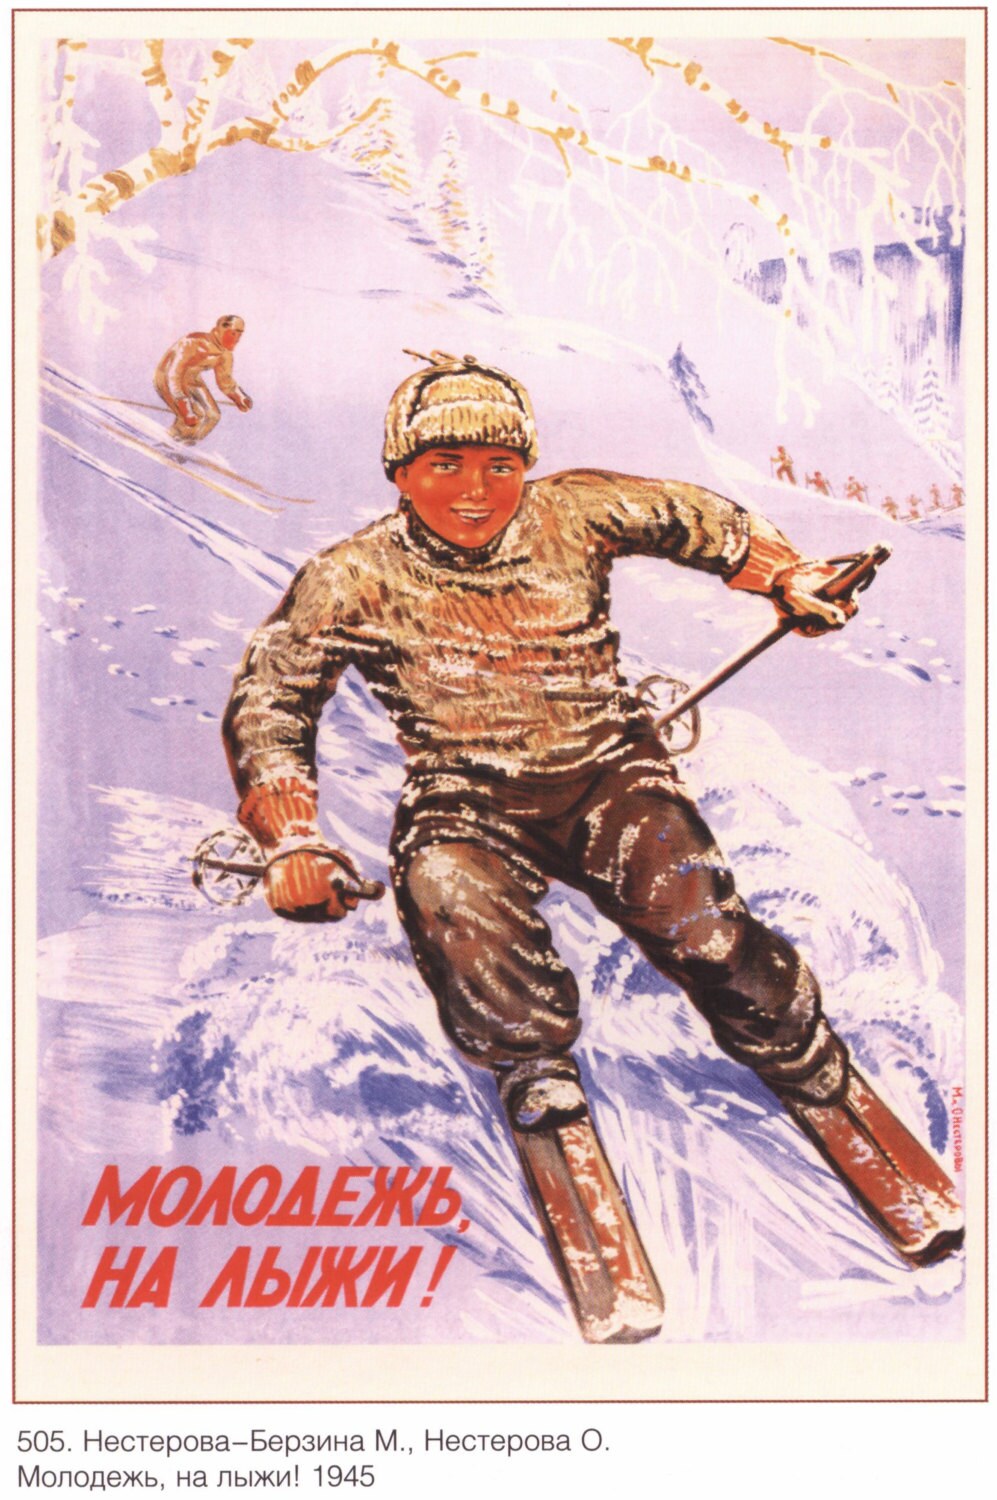 Sports in the USSR. Vintage propaganda Soviet poster